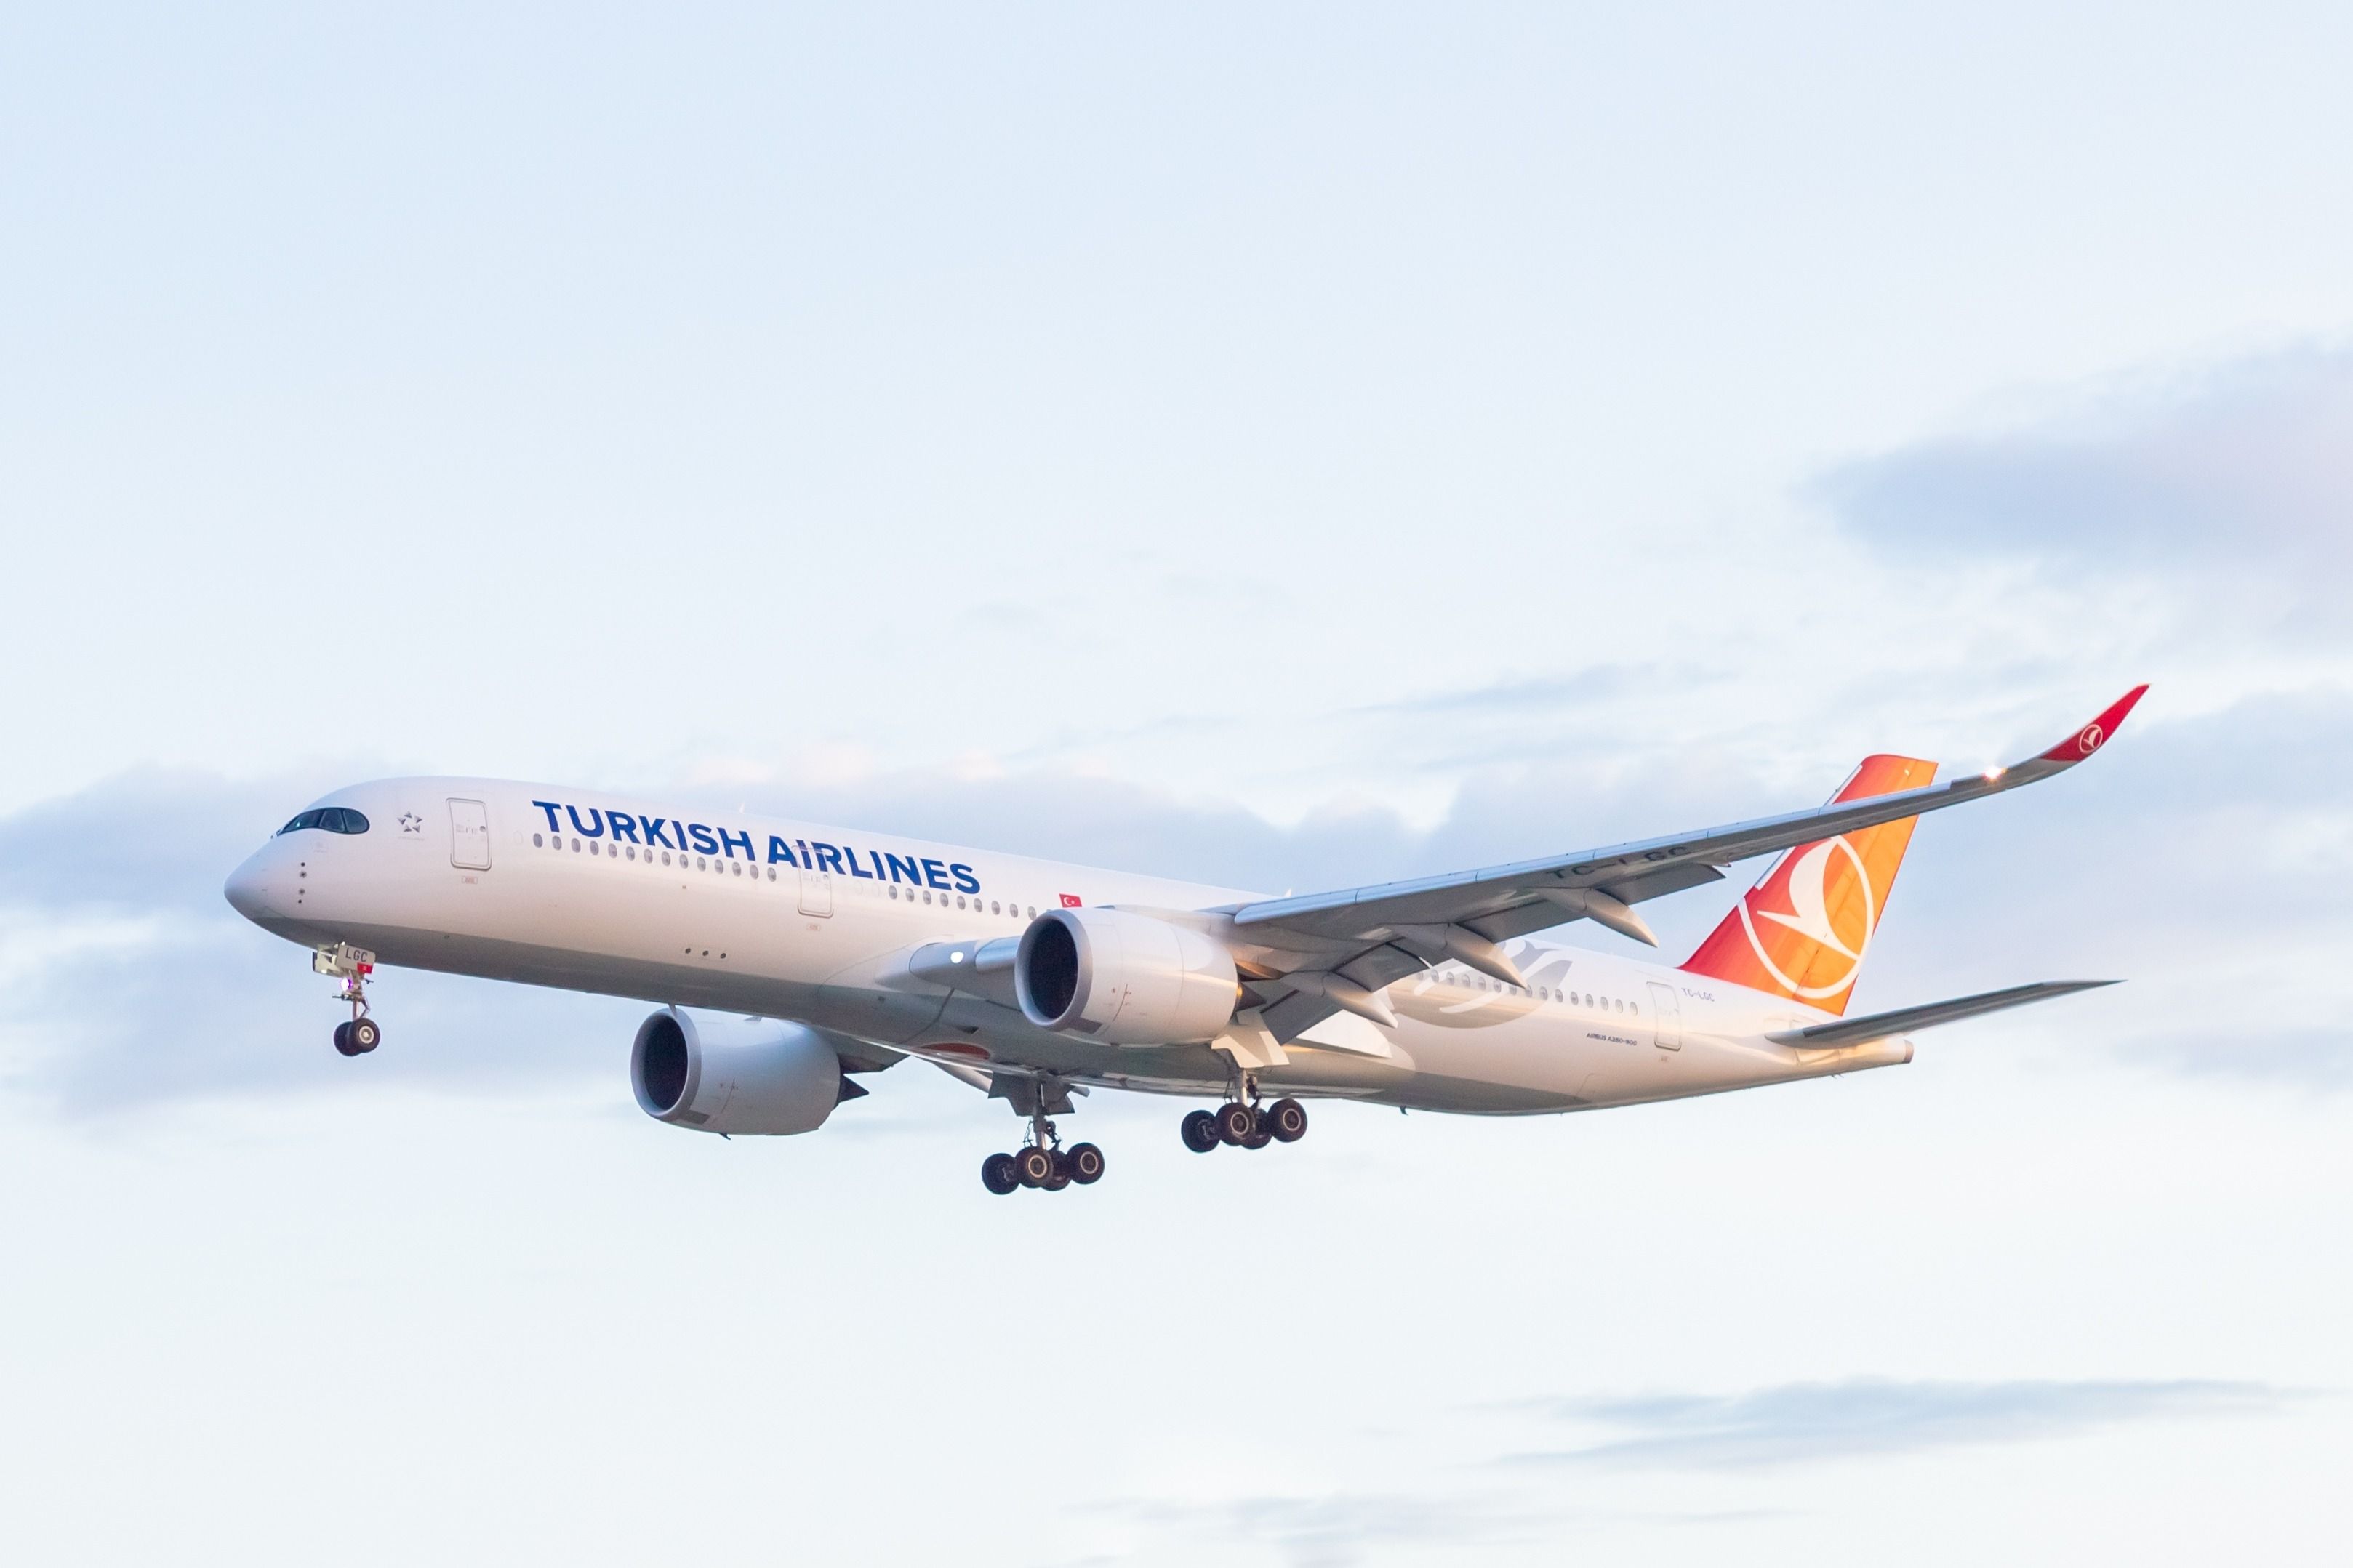 Turkish Airlines Airbus A350-900 landing at Ninoy Aquino International Airport.